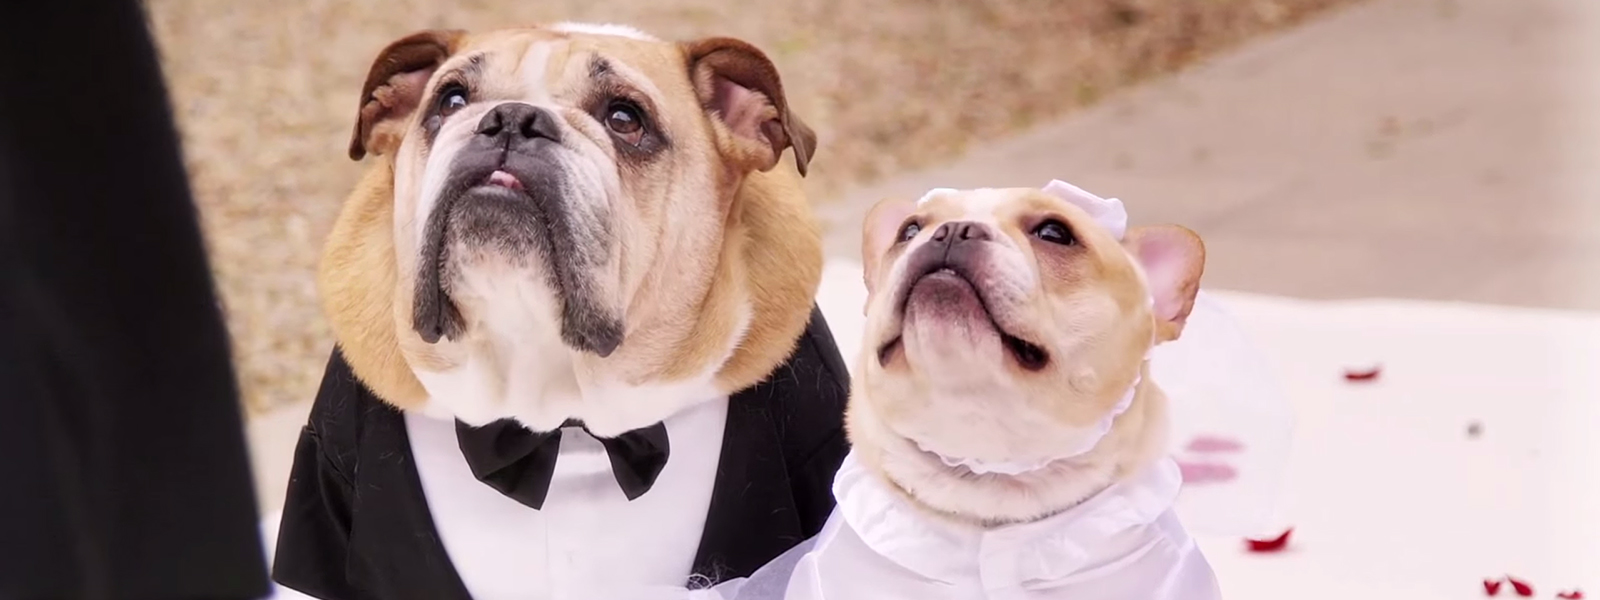 John Legend Dog Wedding (for Charity)